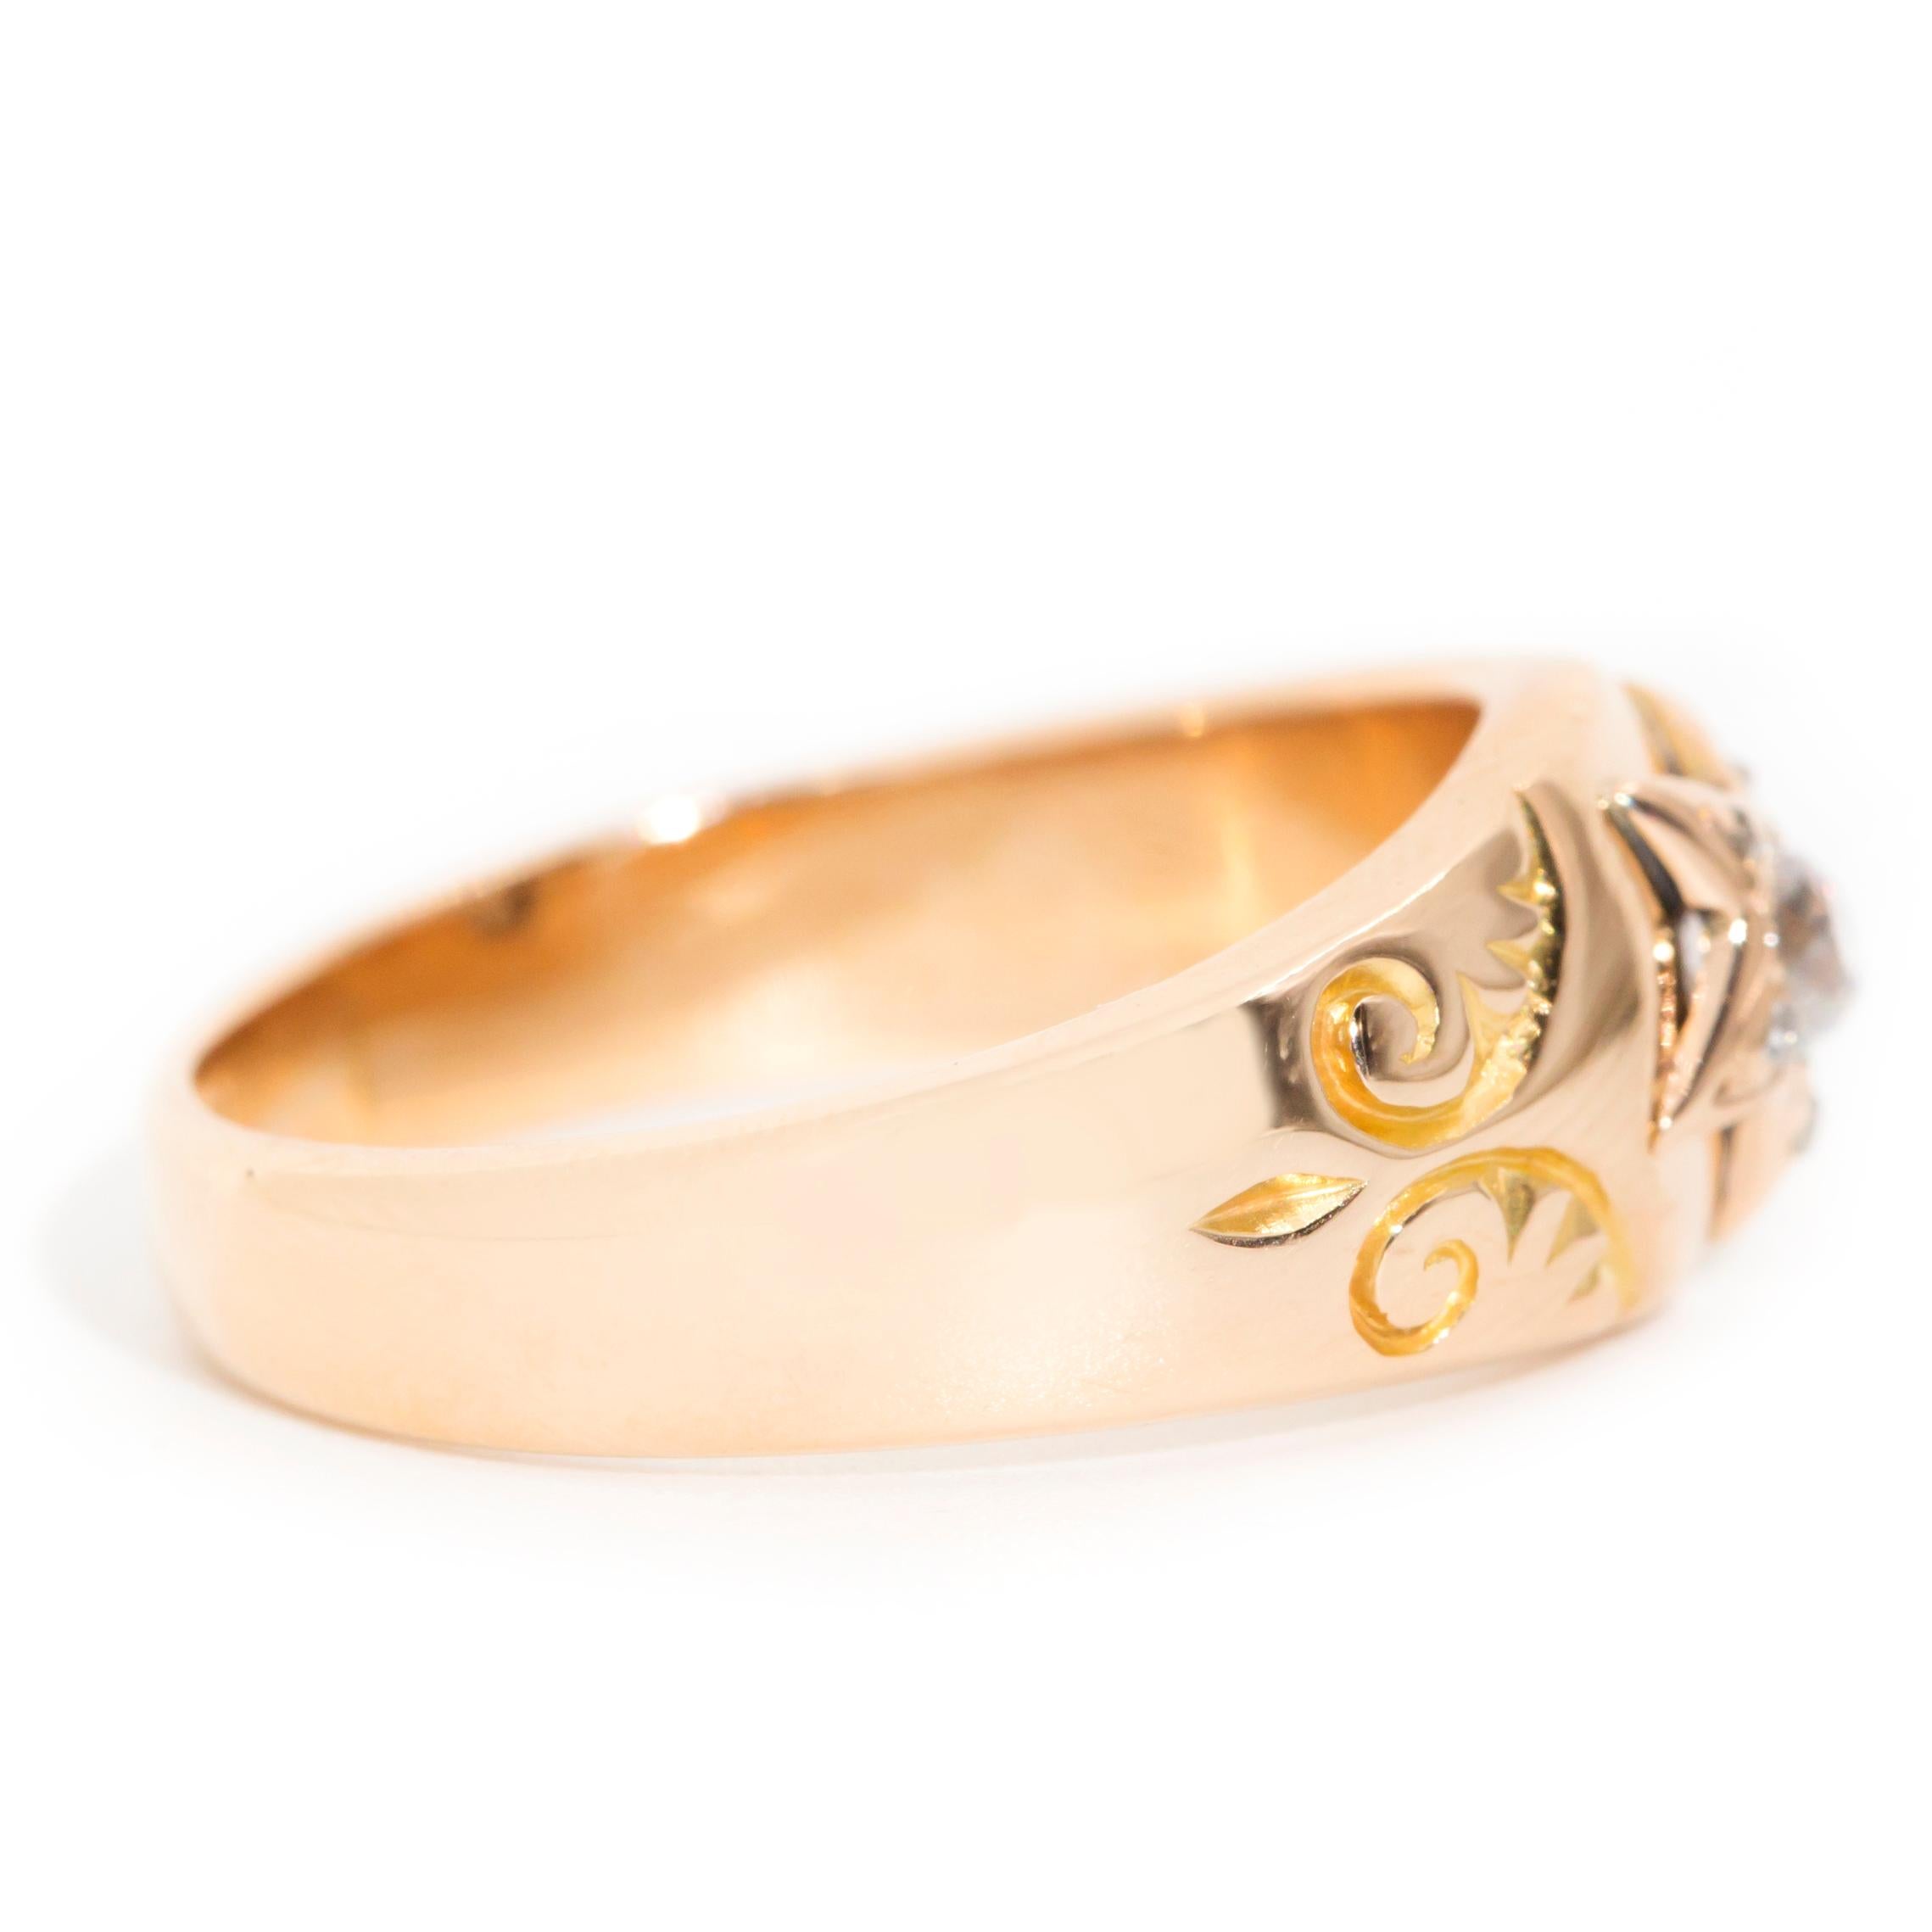 1900s Victorian Old European Cut Star Set Diamond Ring in 18 Carat Yellow Gold 3